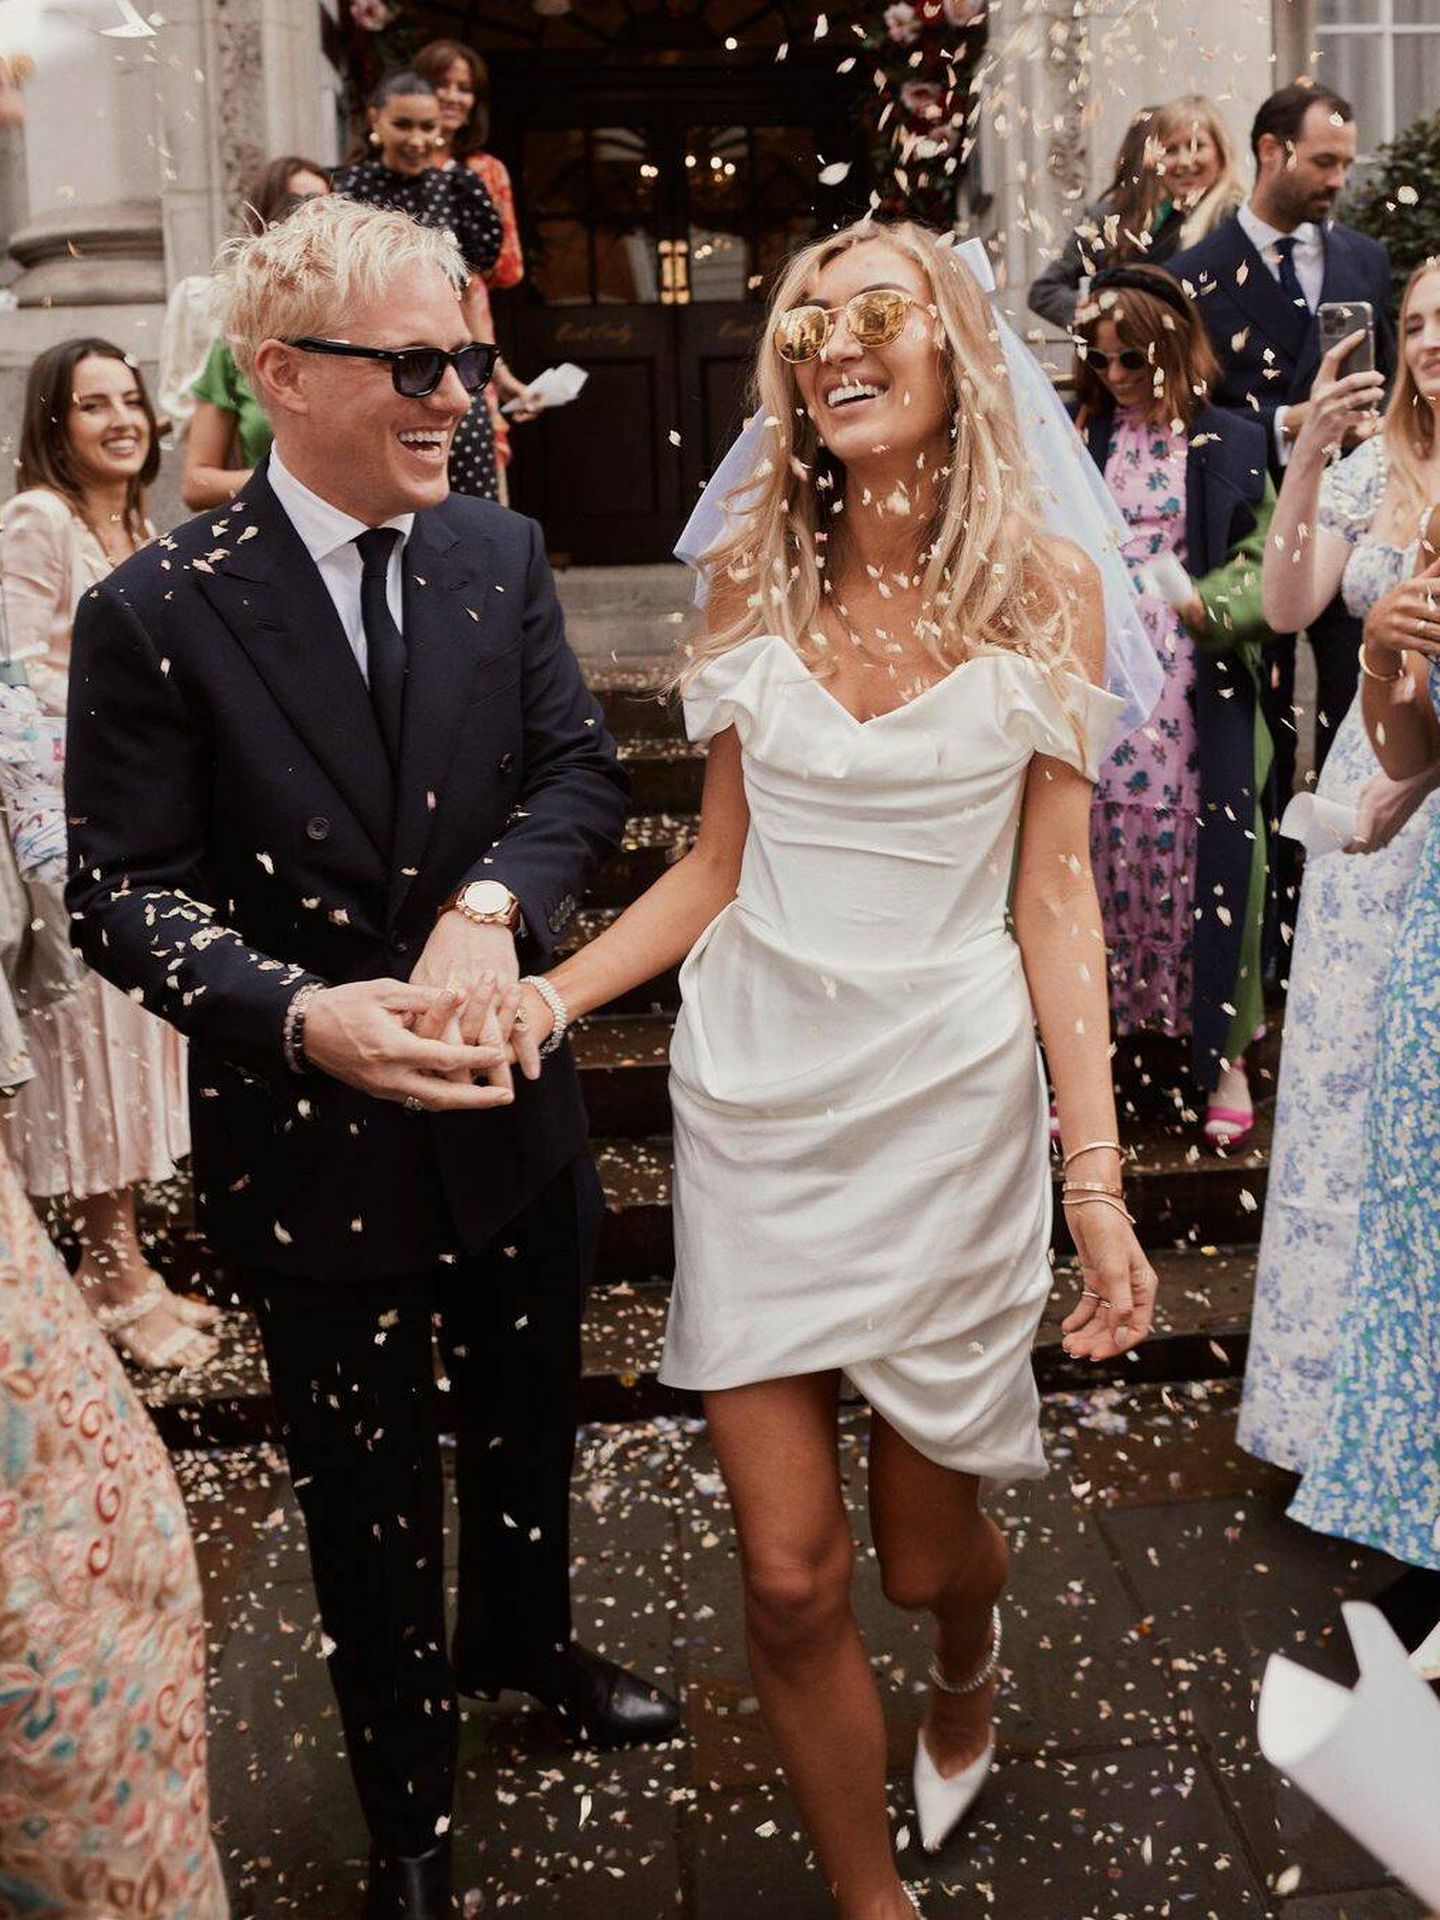 La boda de Jamie y Sophie. (Instagram/@benjaminwheeler)